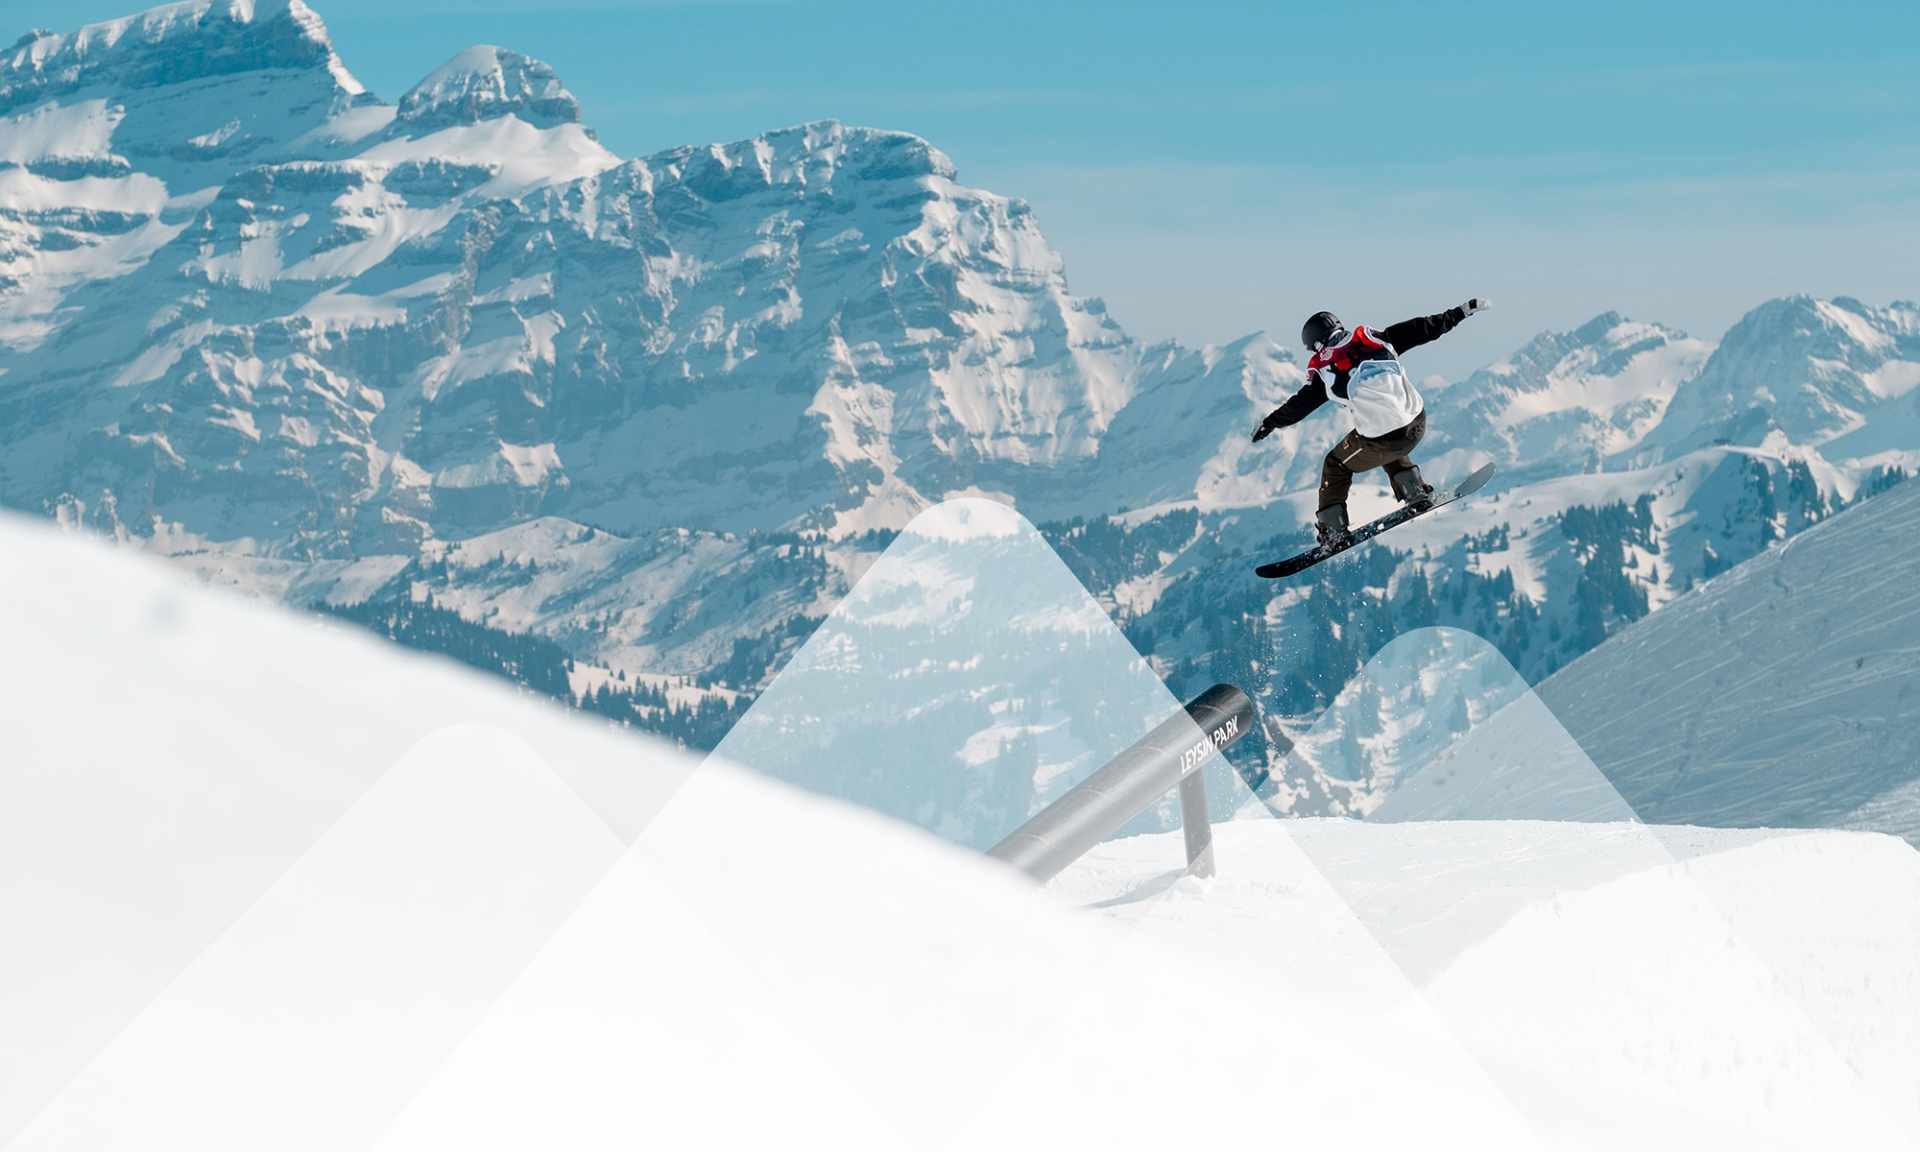 Snowpark avec Snowboarder rail saut - Leysin - Hiver